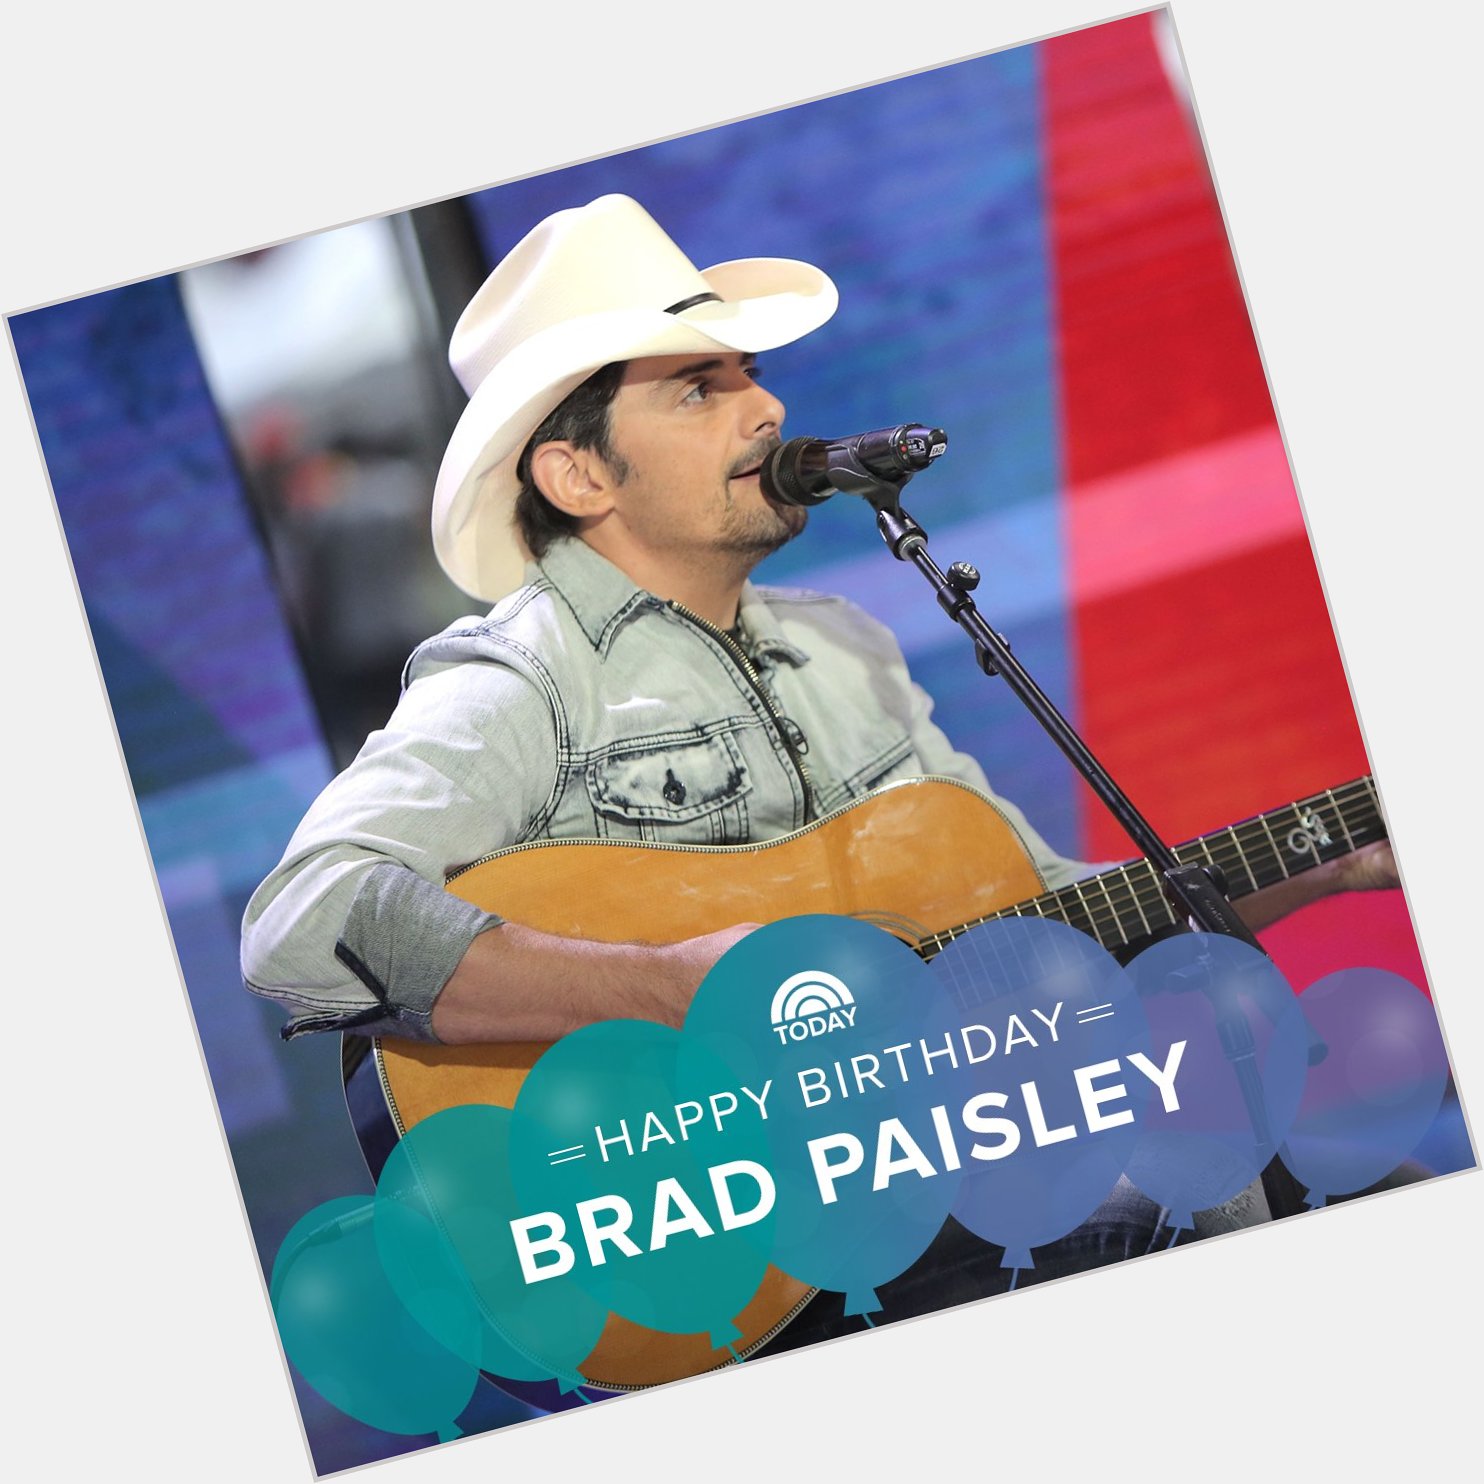 Happy birthday, Brad Paisley!  